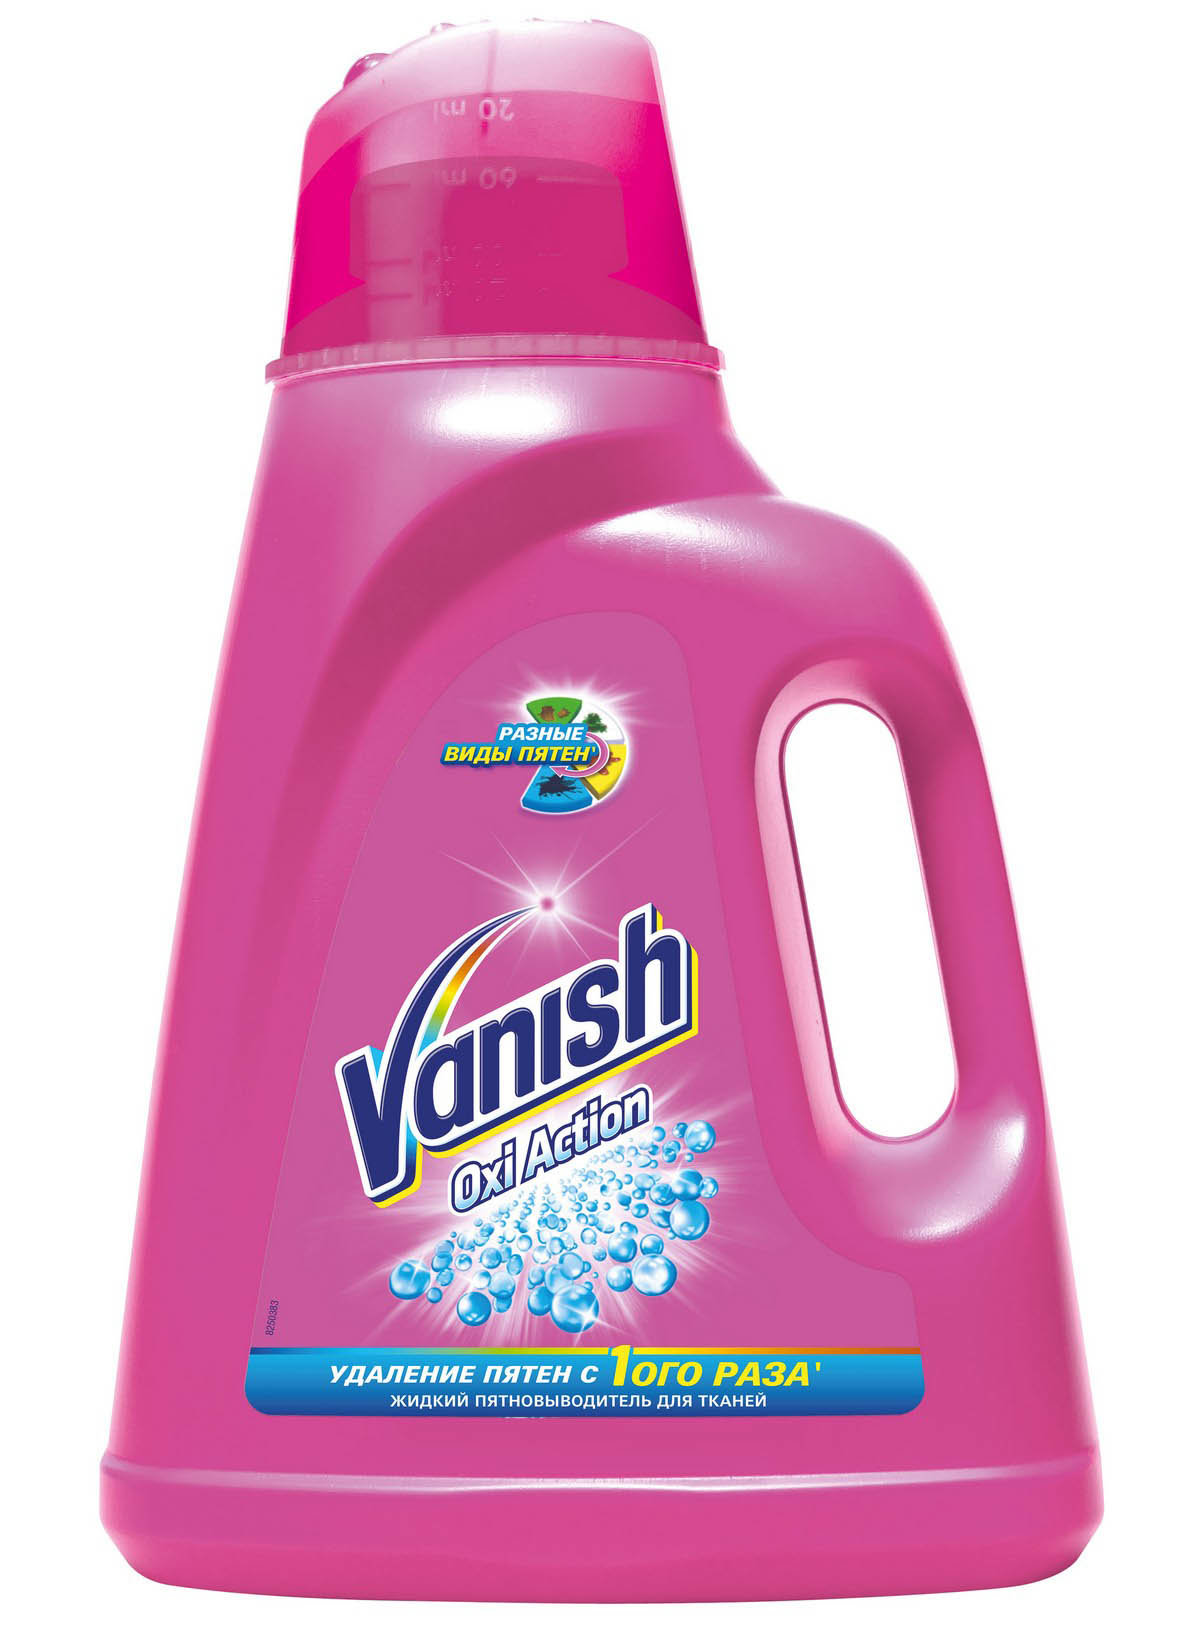   (Vanish) OXI Action     2,  692  Vanish